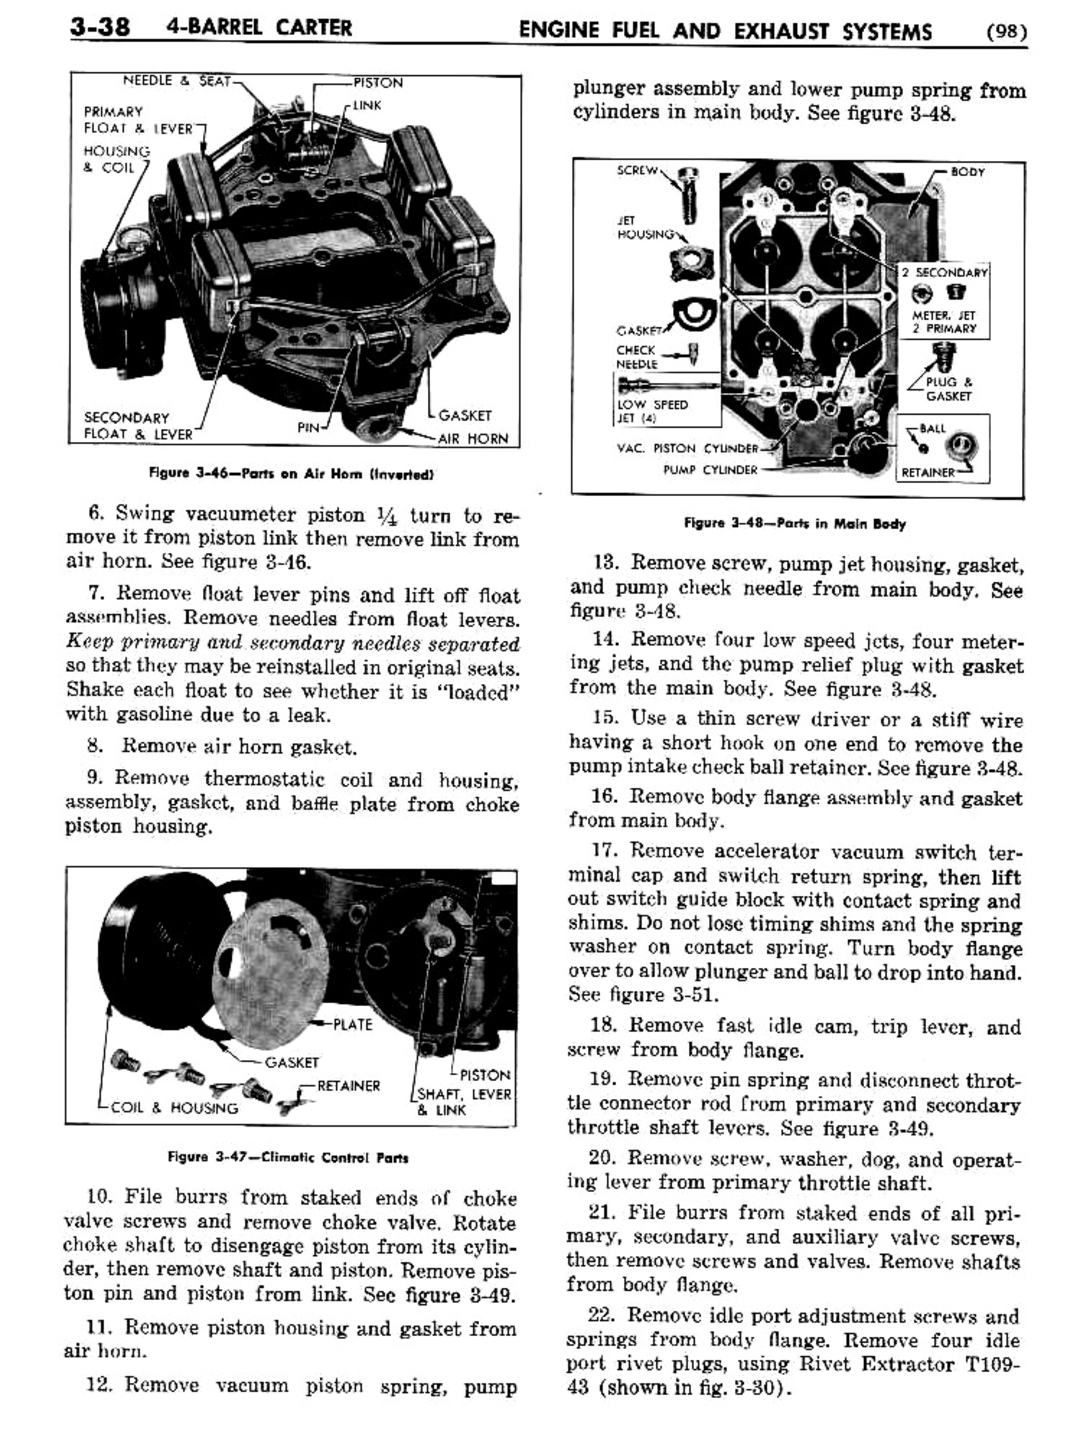 n_04 1954 Buick Shop Manual - Engine Fuel & Exhaust-038-038.jpg